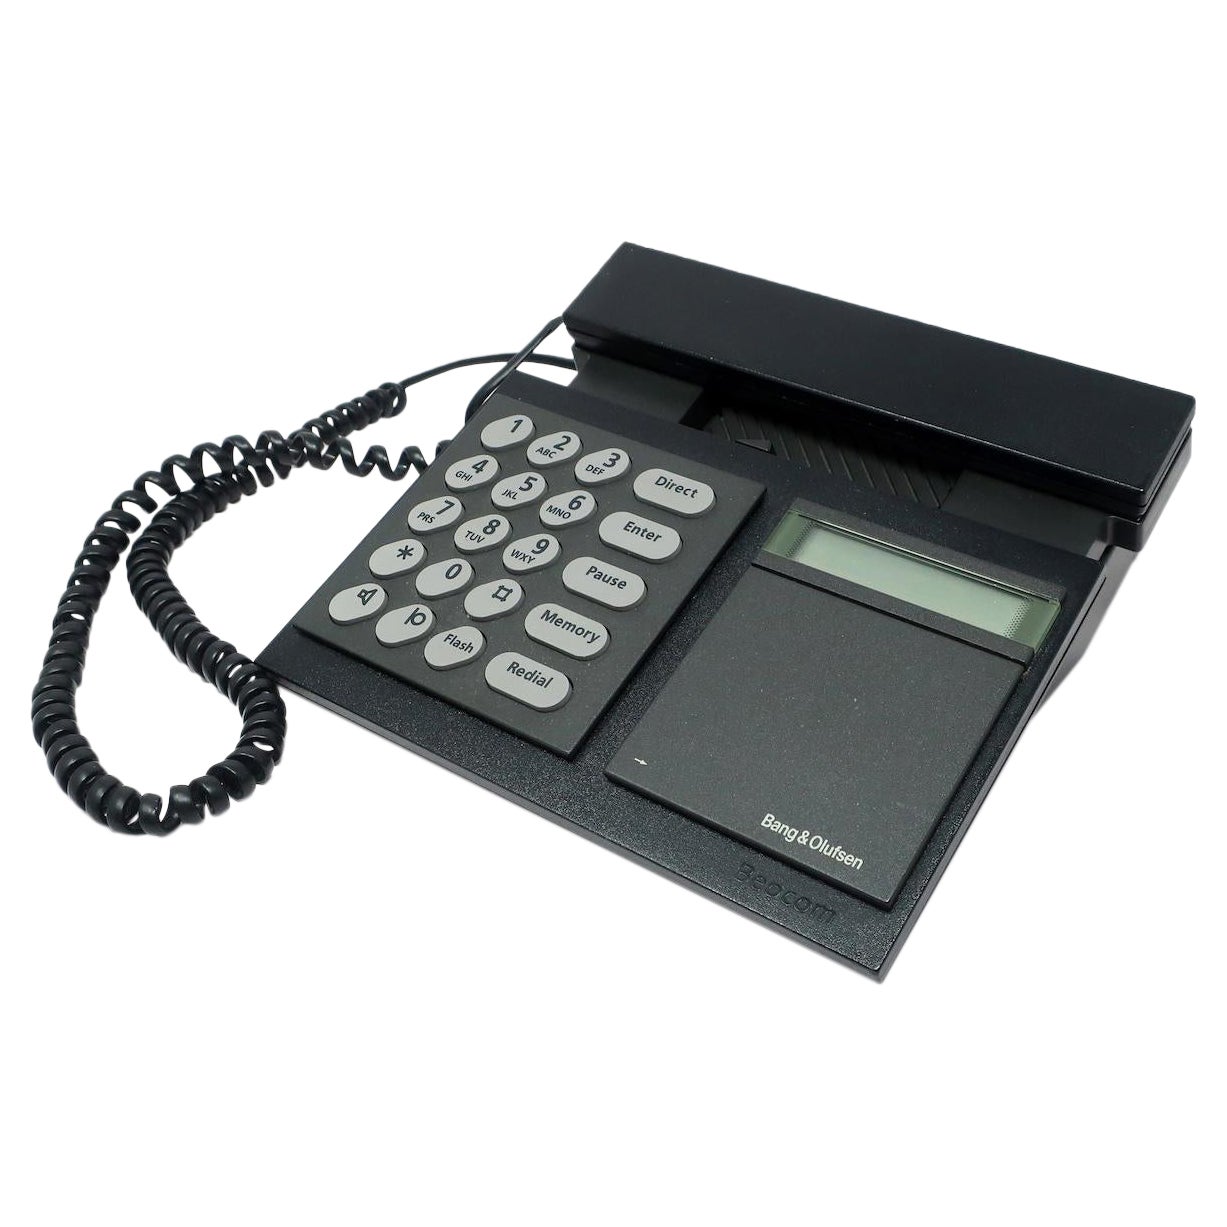 1980s, Black Bang & Olufsen Beocom 2000 Phone